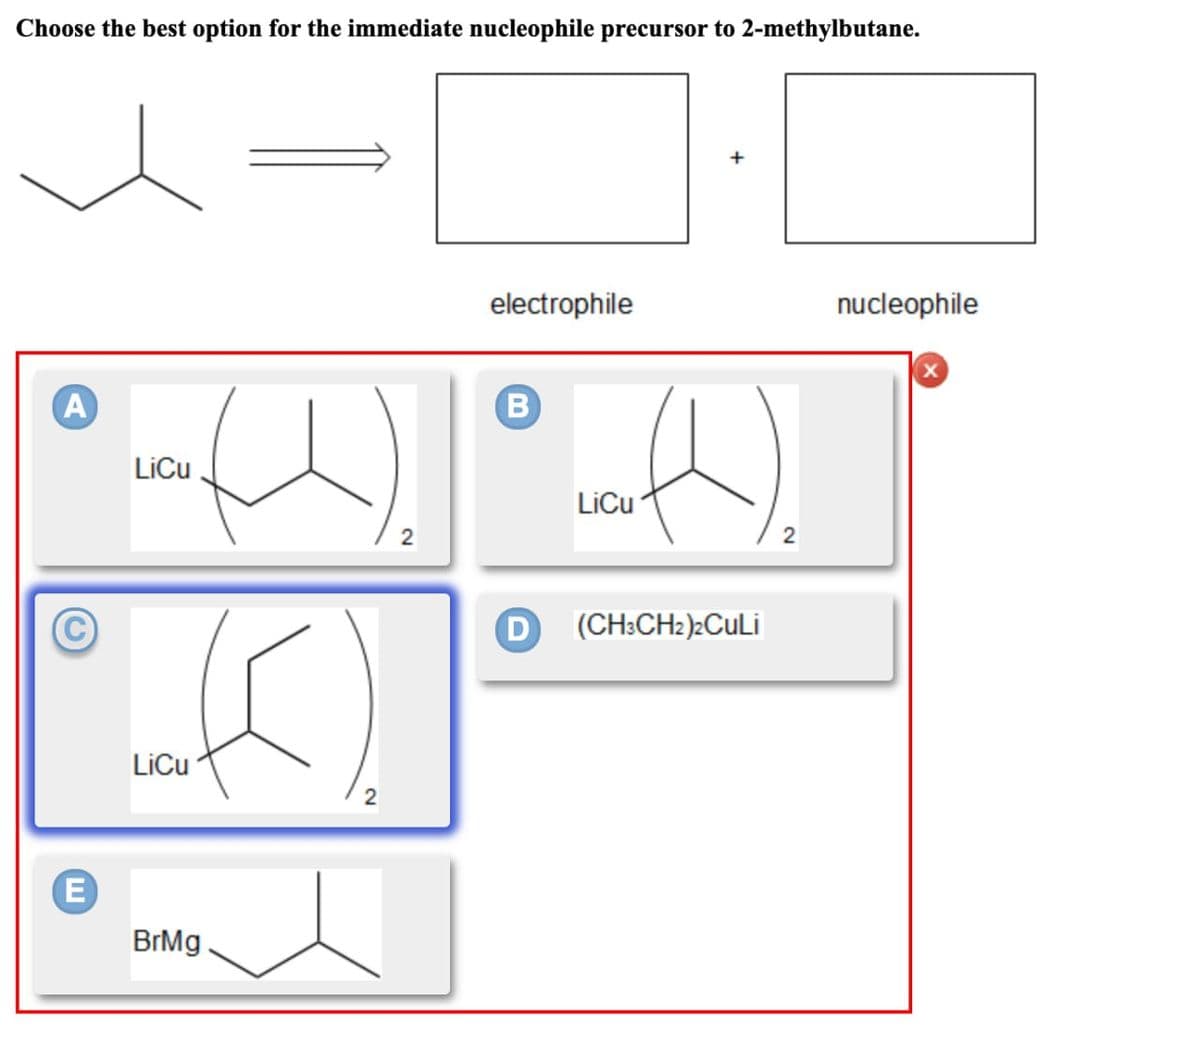 Choose the best option for the immediate nucleophile precursor to 2-methylbutane.
A
LiCu
LiCu
E
BrMg
2
2
electrophile
nucleophile
B
LiCu
D (CH3CH2)2CuLi
2